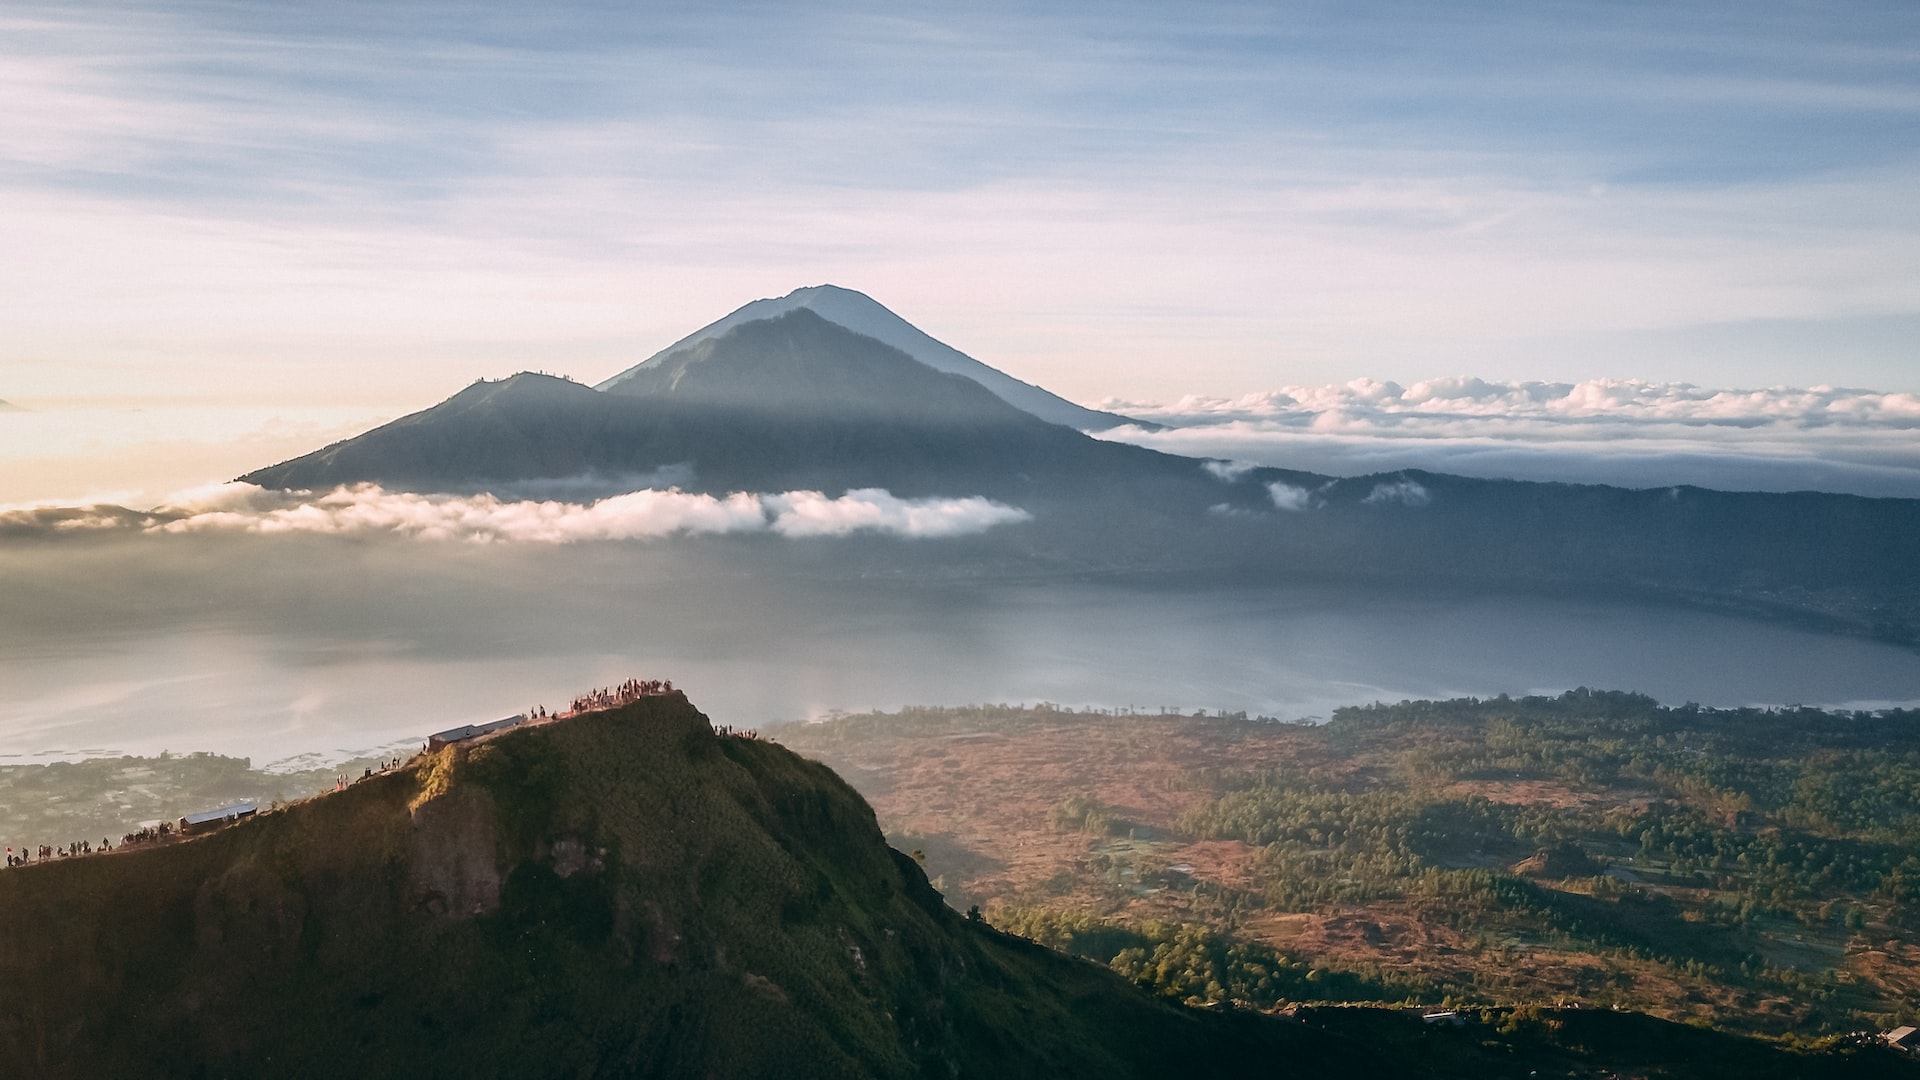 Mount Batur Bali Travel Guide
